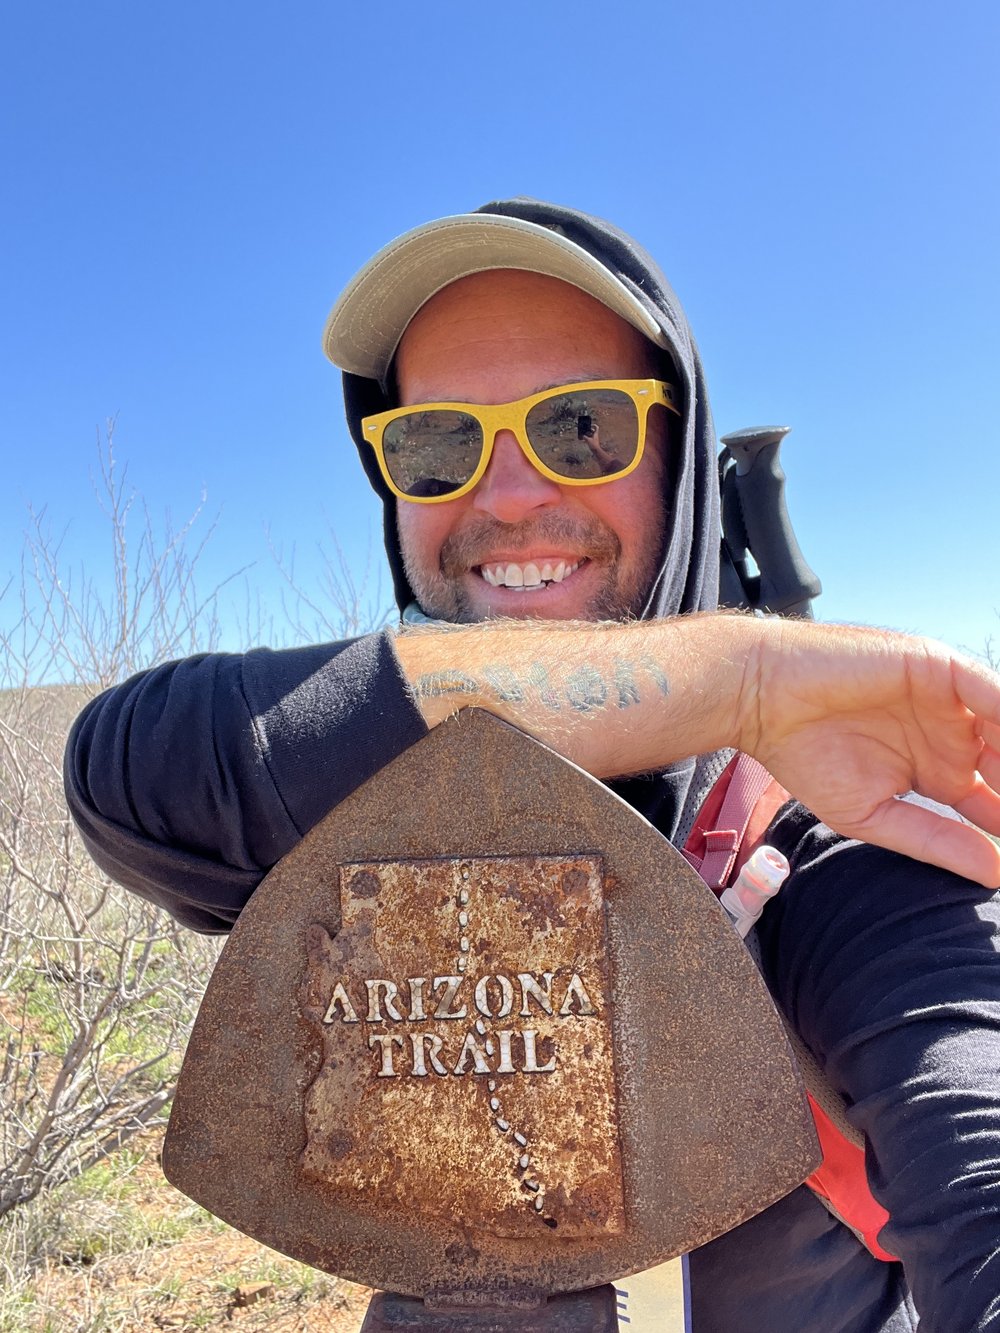 Arizona Trail Sign Selfie.jpg